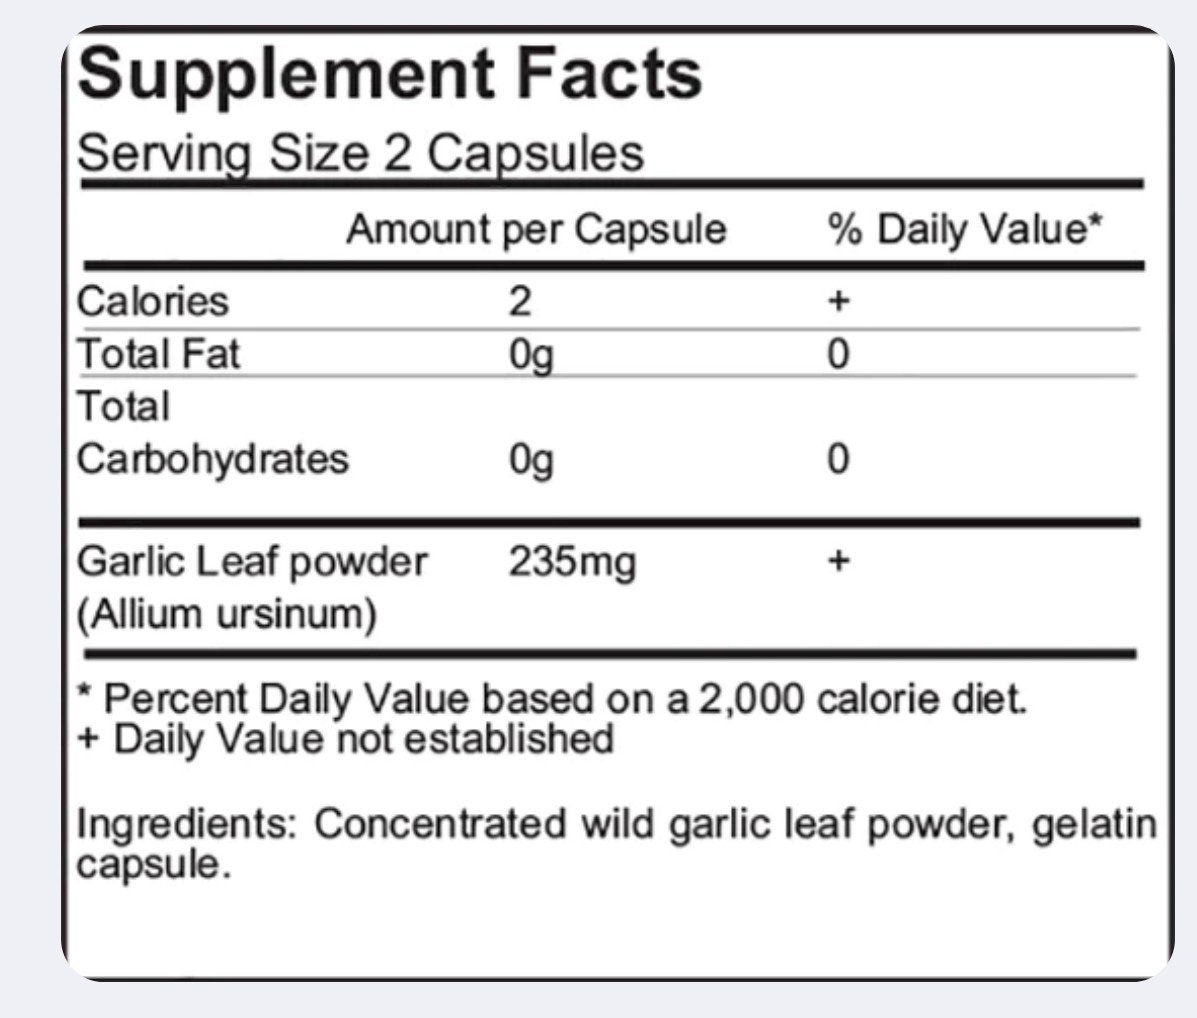 Arizona Natural Products Garlic-Wild Bear&#39;s Organic 90 Capsule